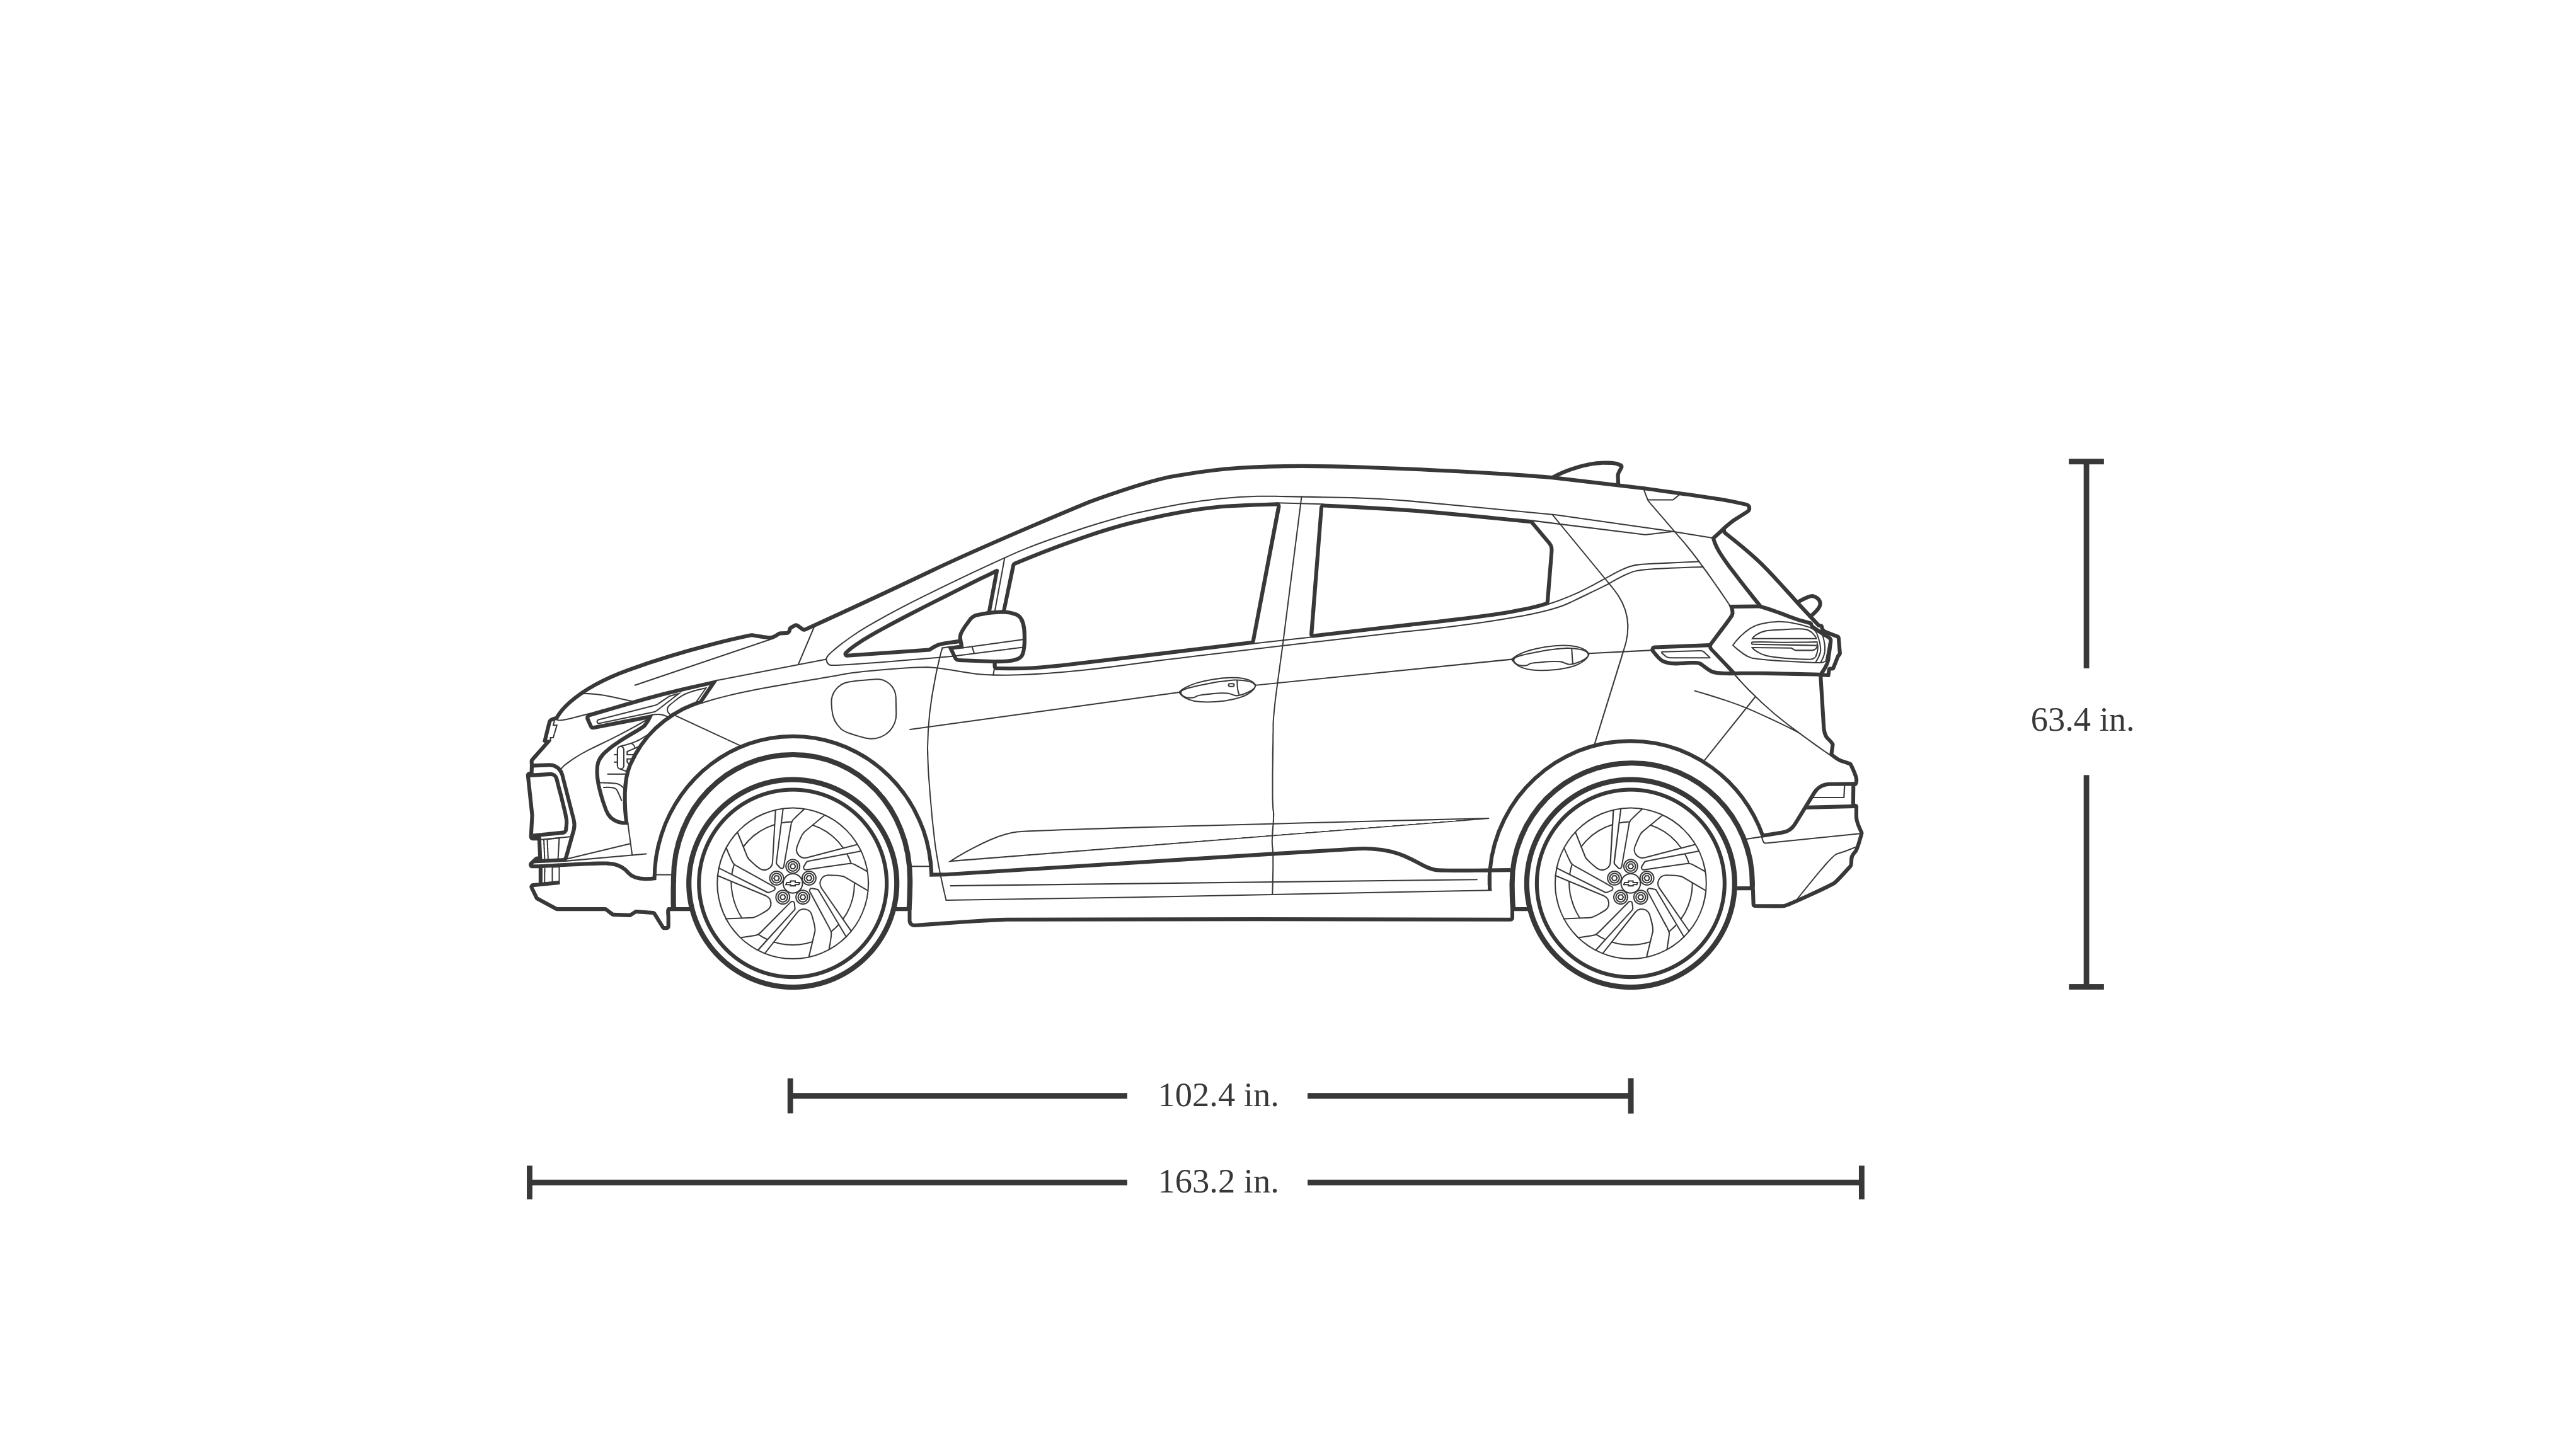 Vehicle Dimensions Diagram